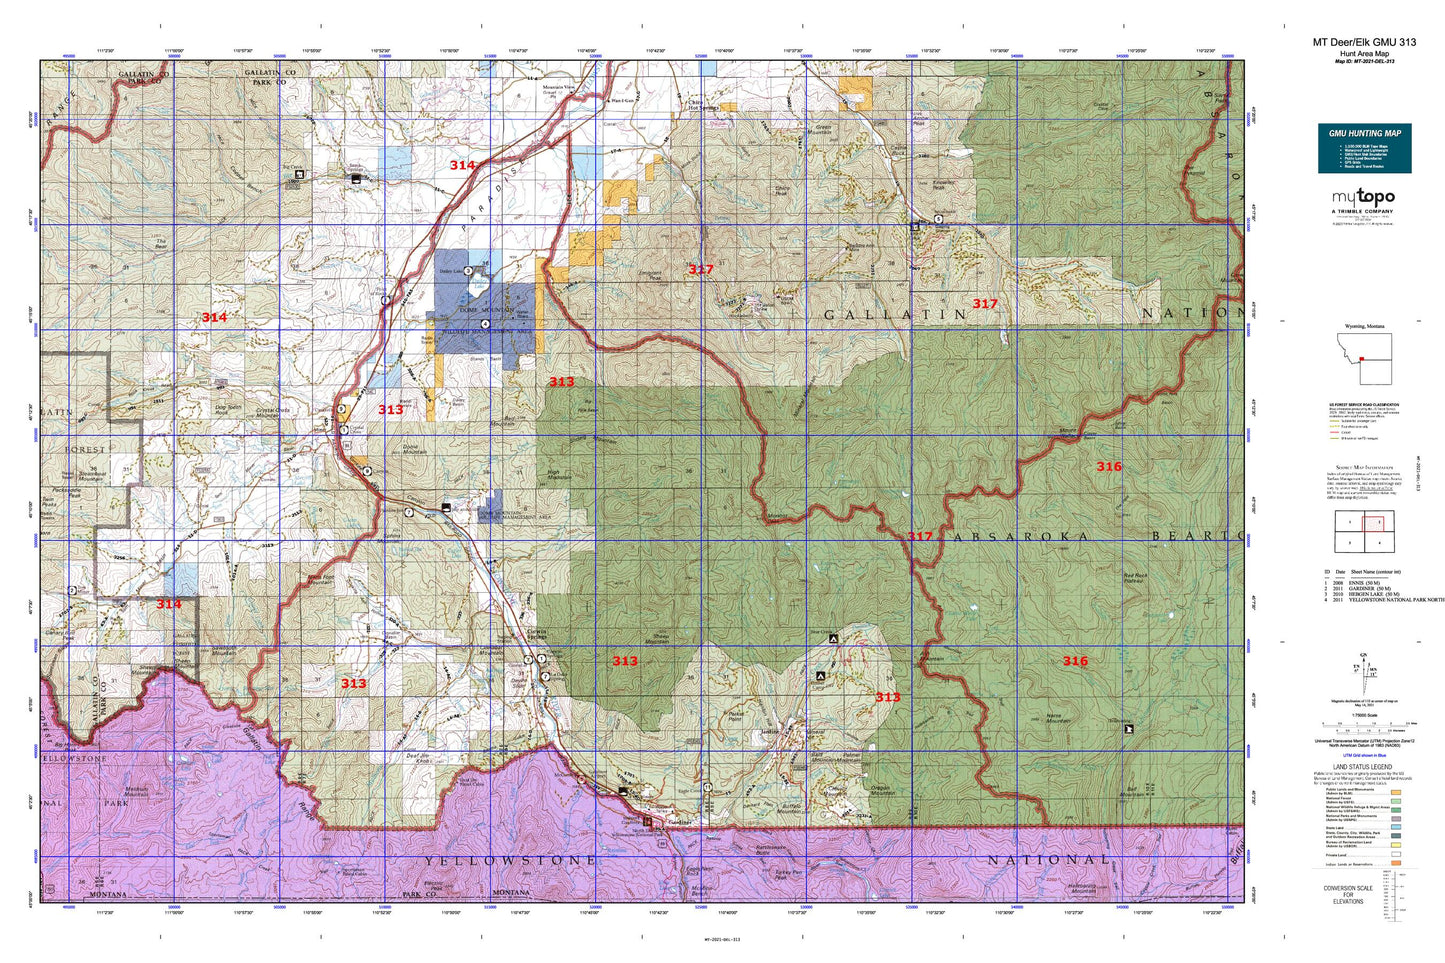 Montana Deer/Elk GMU 313 Map Image